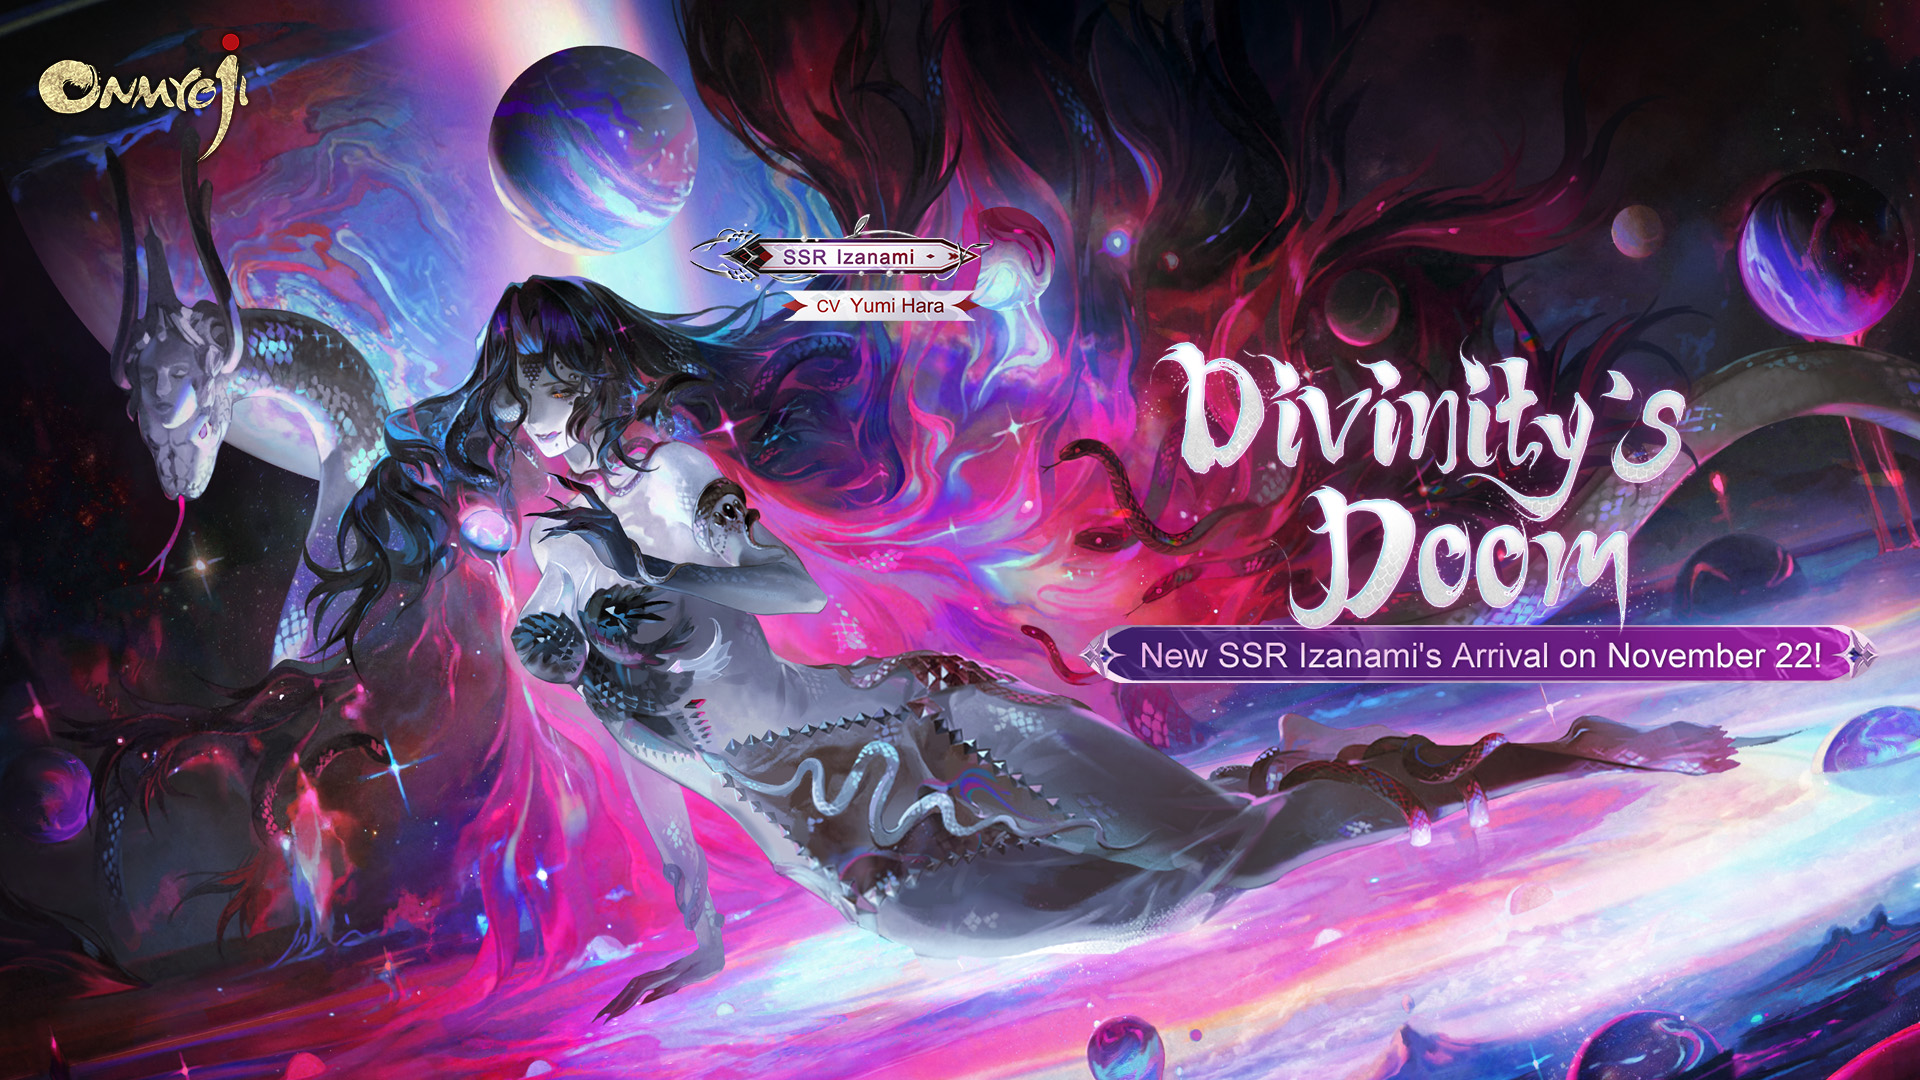 Onmyoji's New SSR Izanami Arrives with the Divinity's Doom Event!